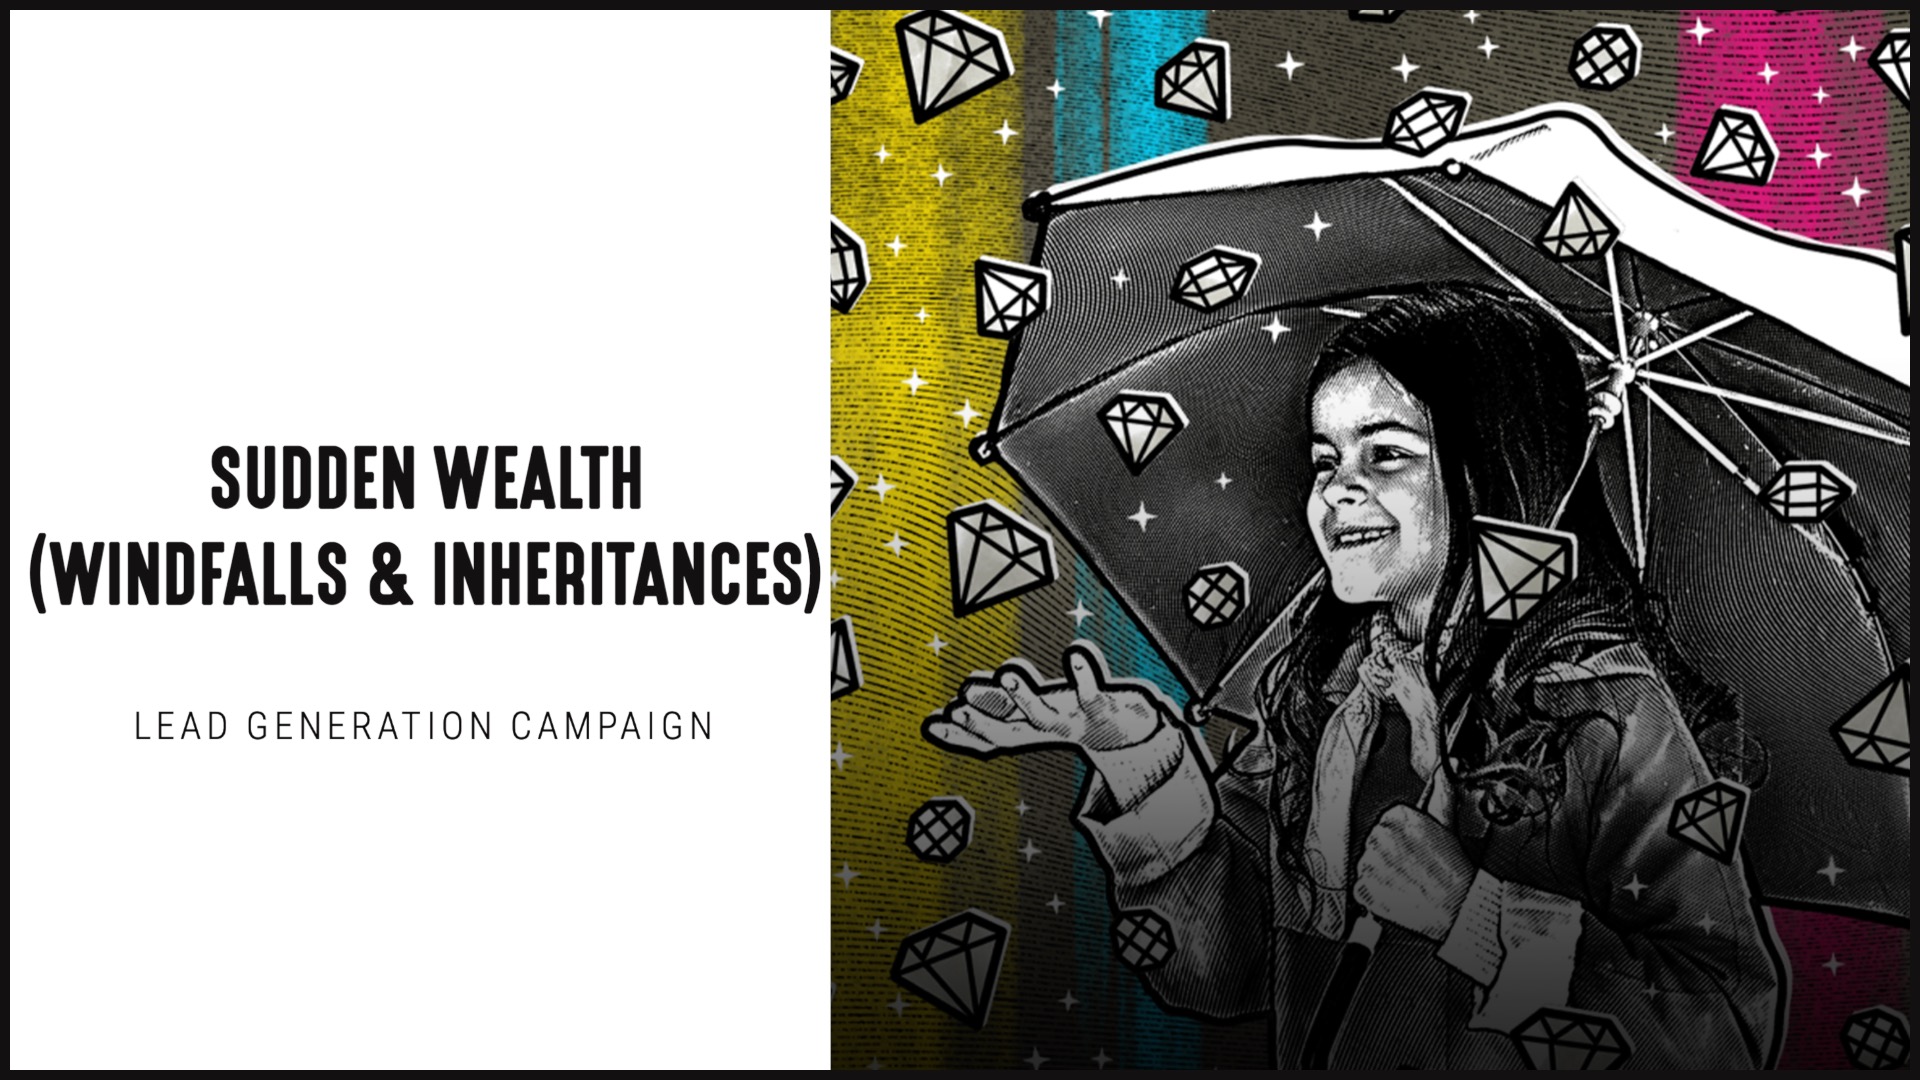 [NEW] Lead Generation Campaign | Sudden Wealth (Windfalls & Inheritances)